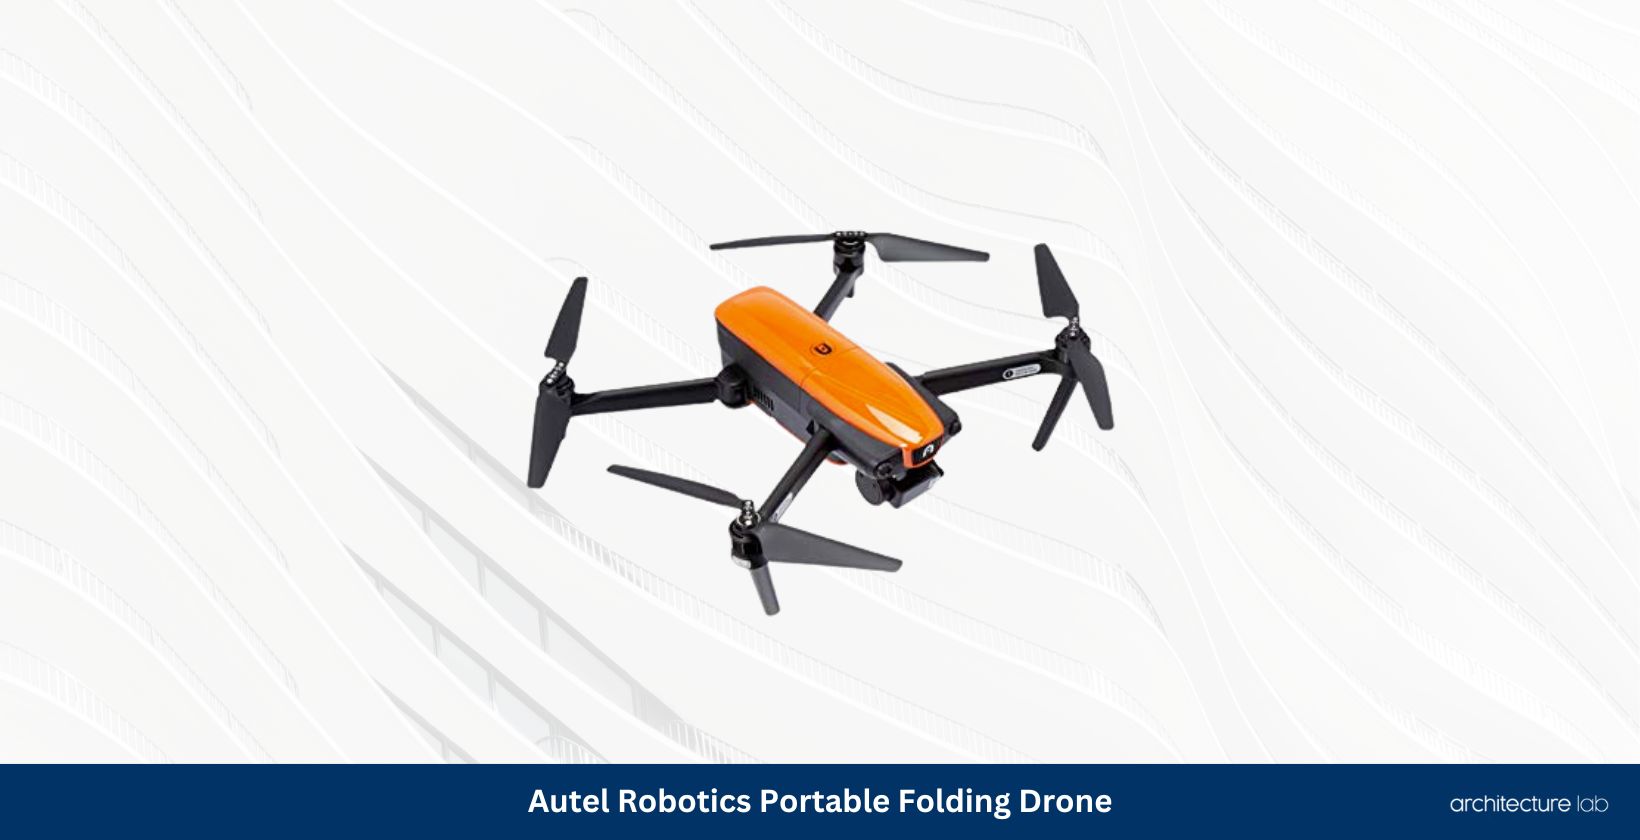 Autel robotics portable folding drone